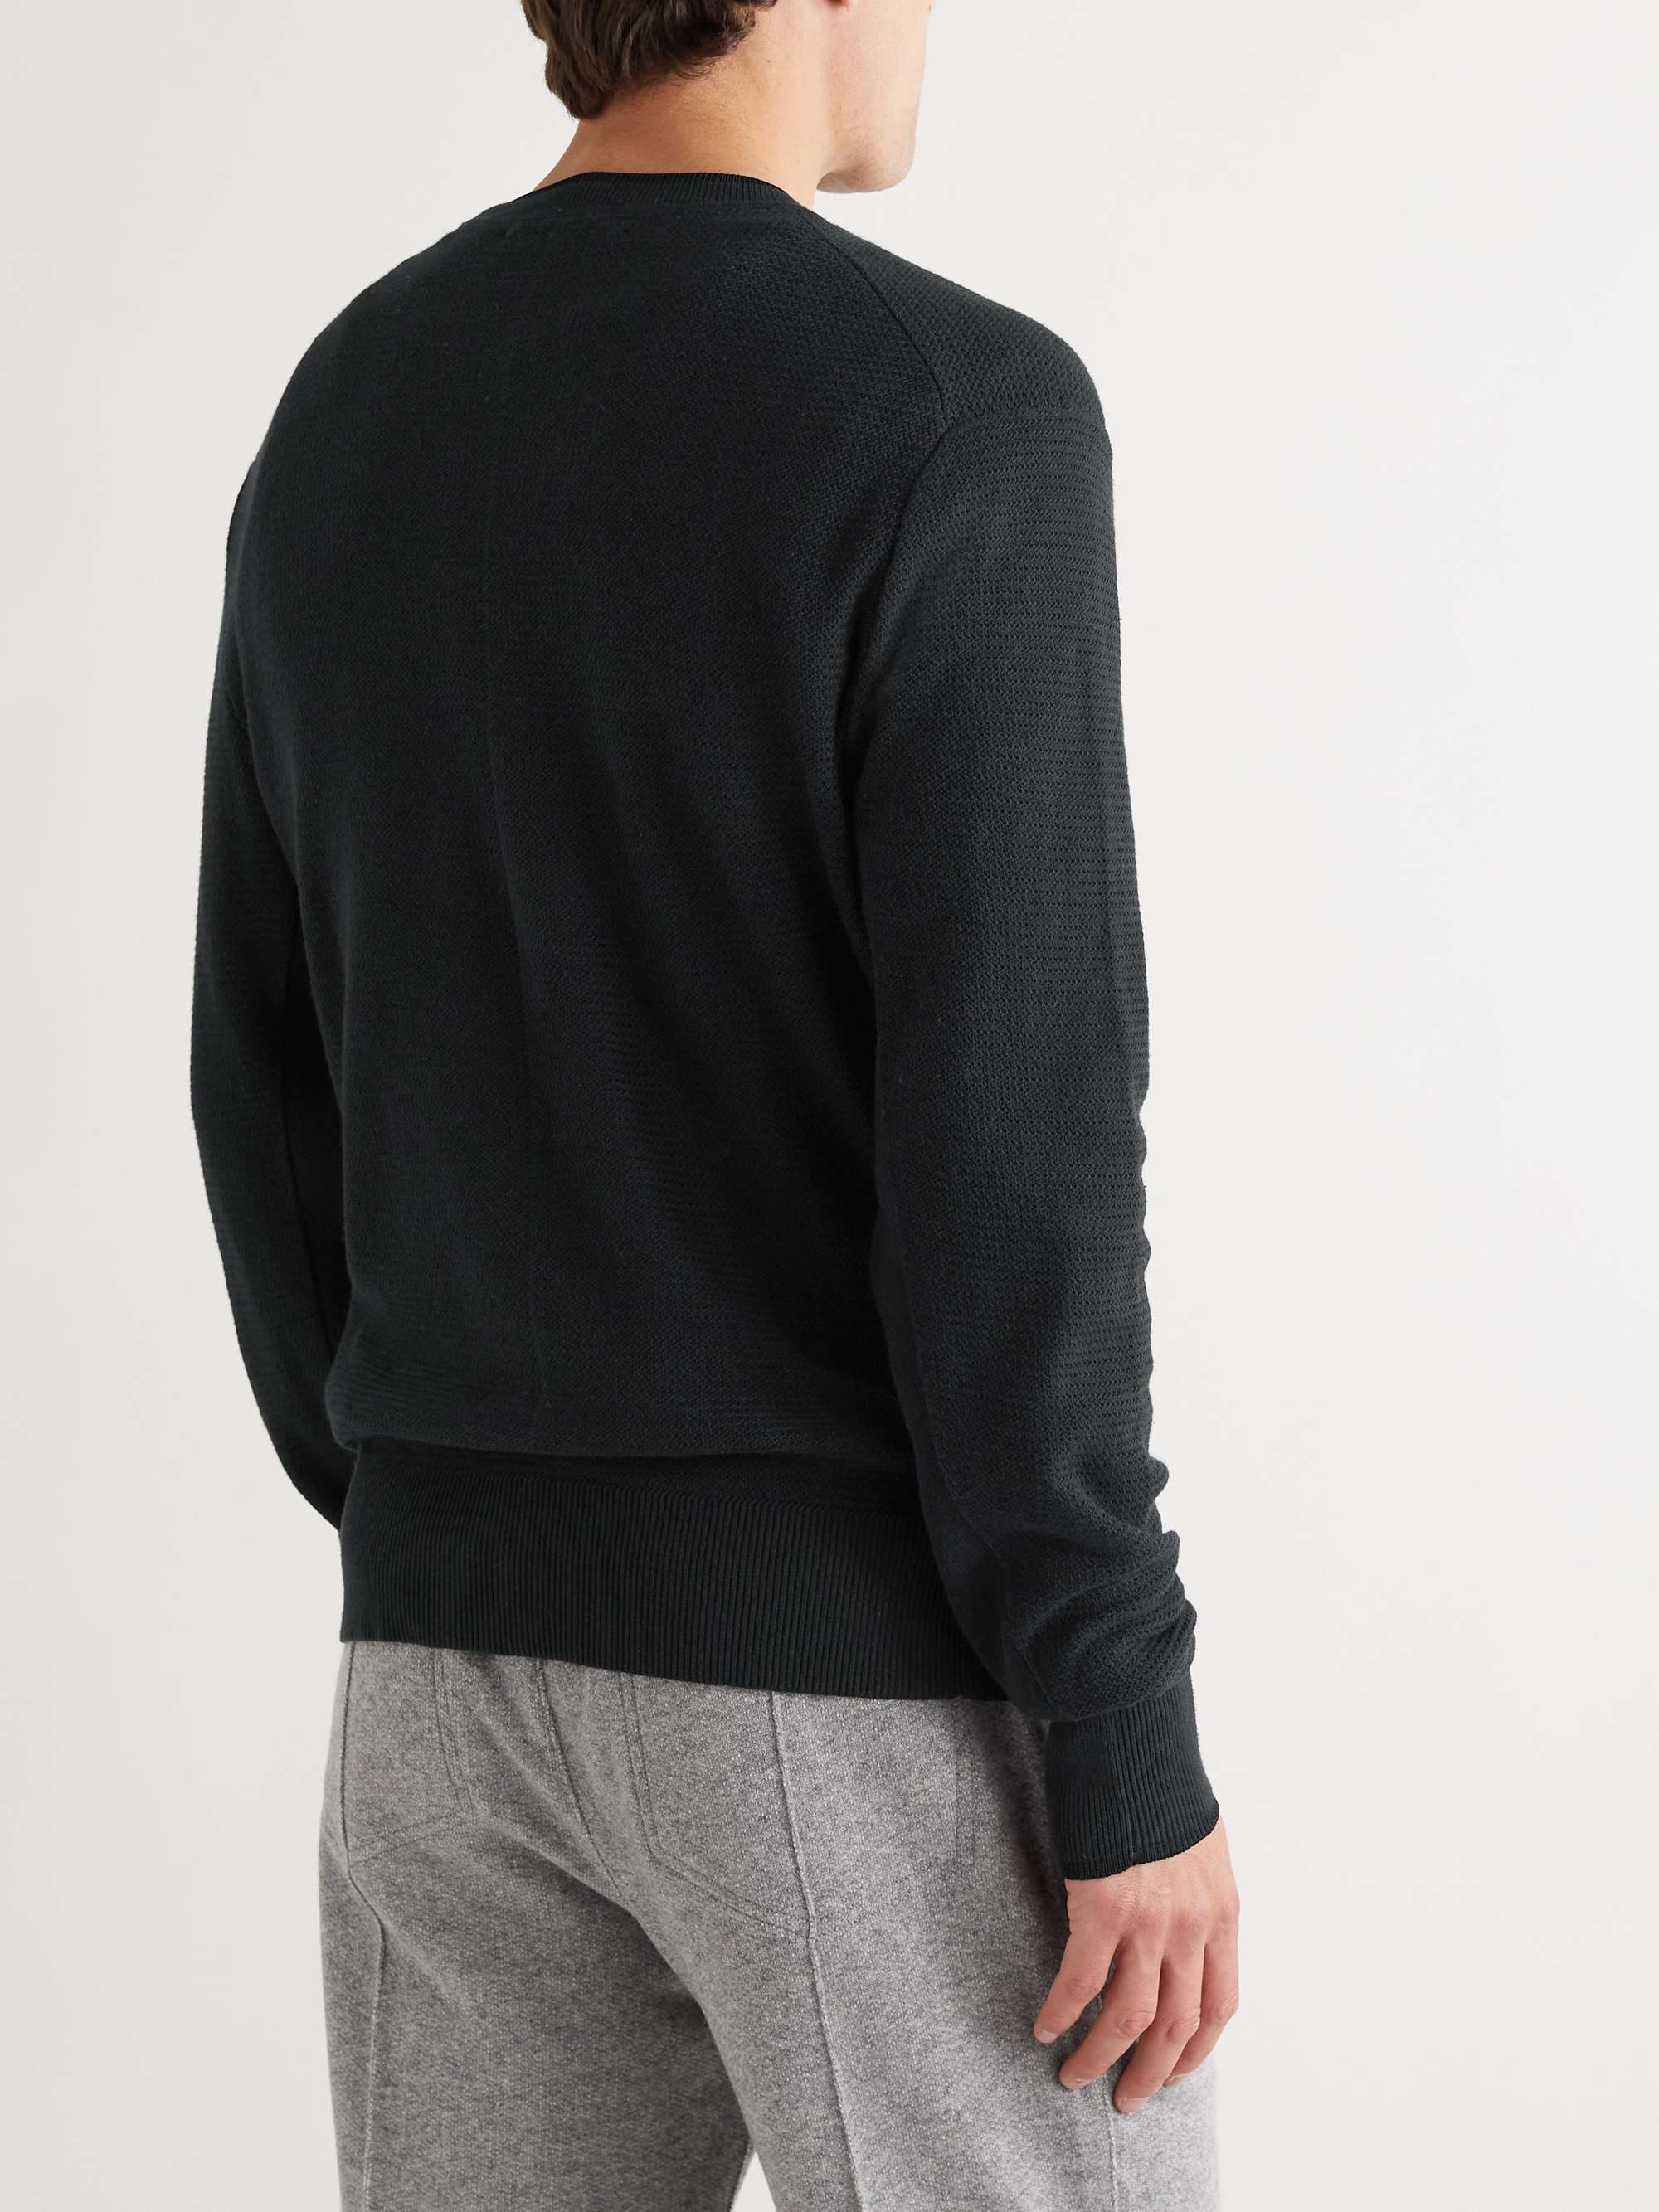 RAG & BONE Slim-Fit Cotton-Blend Sweater